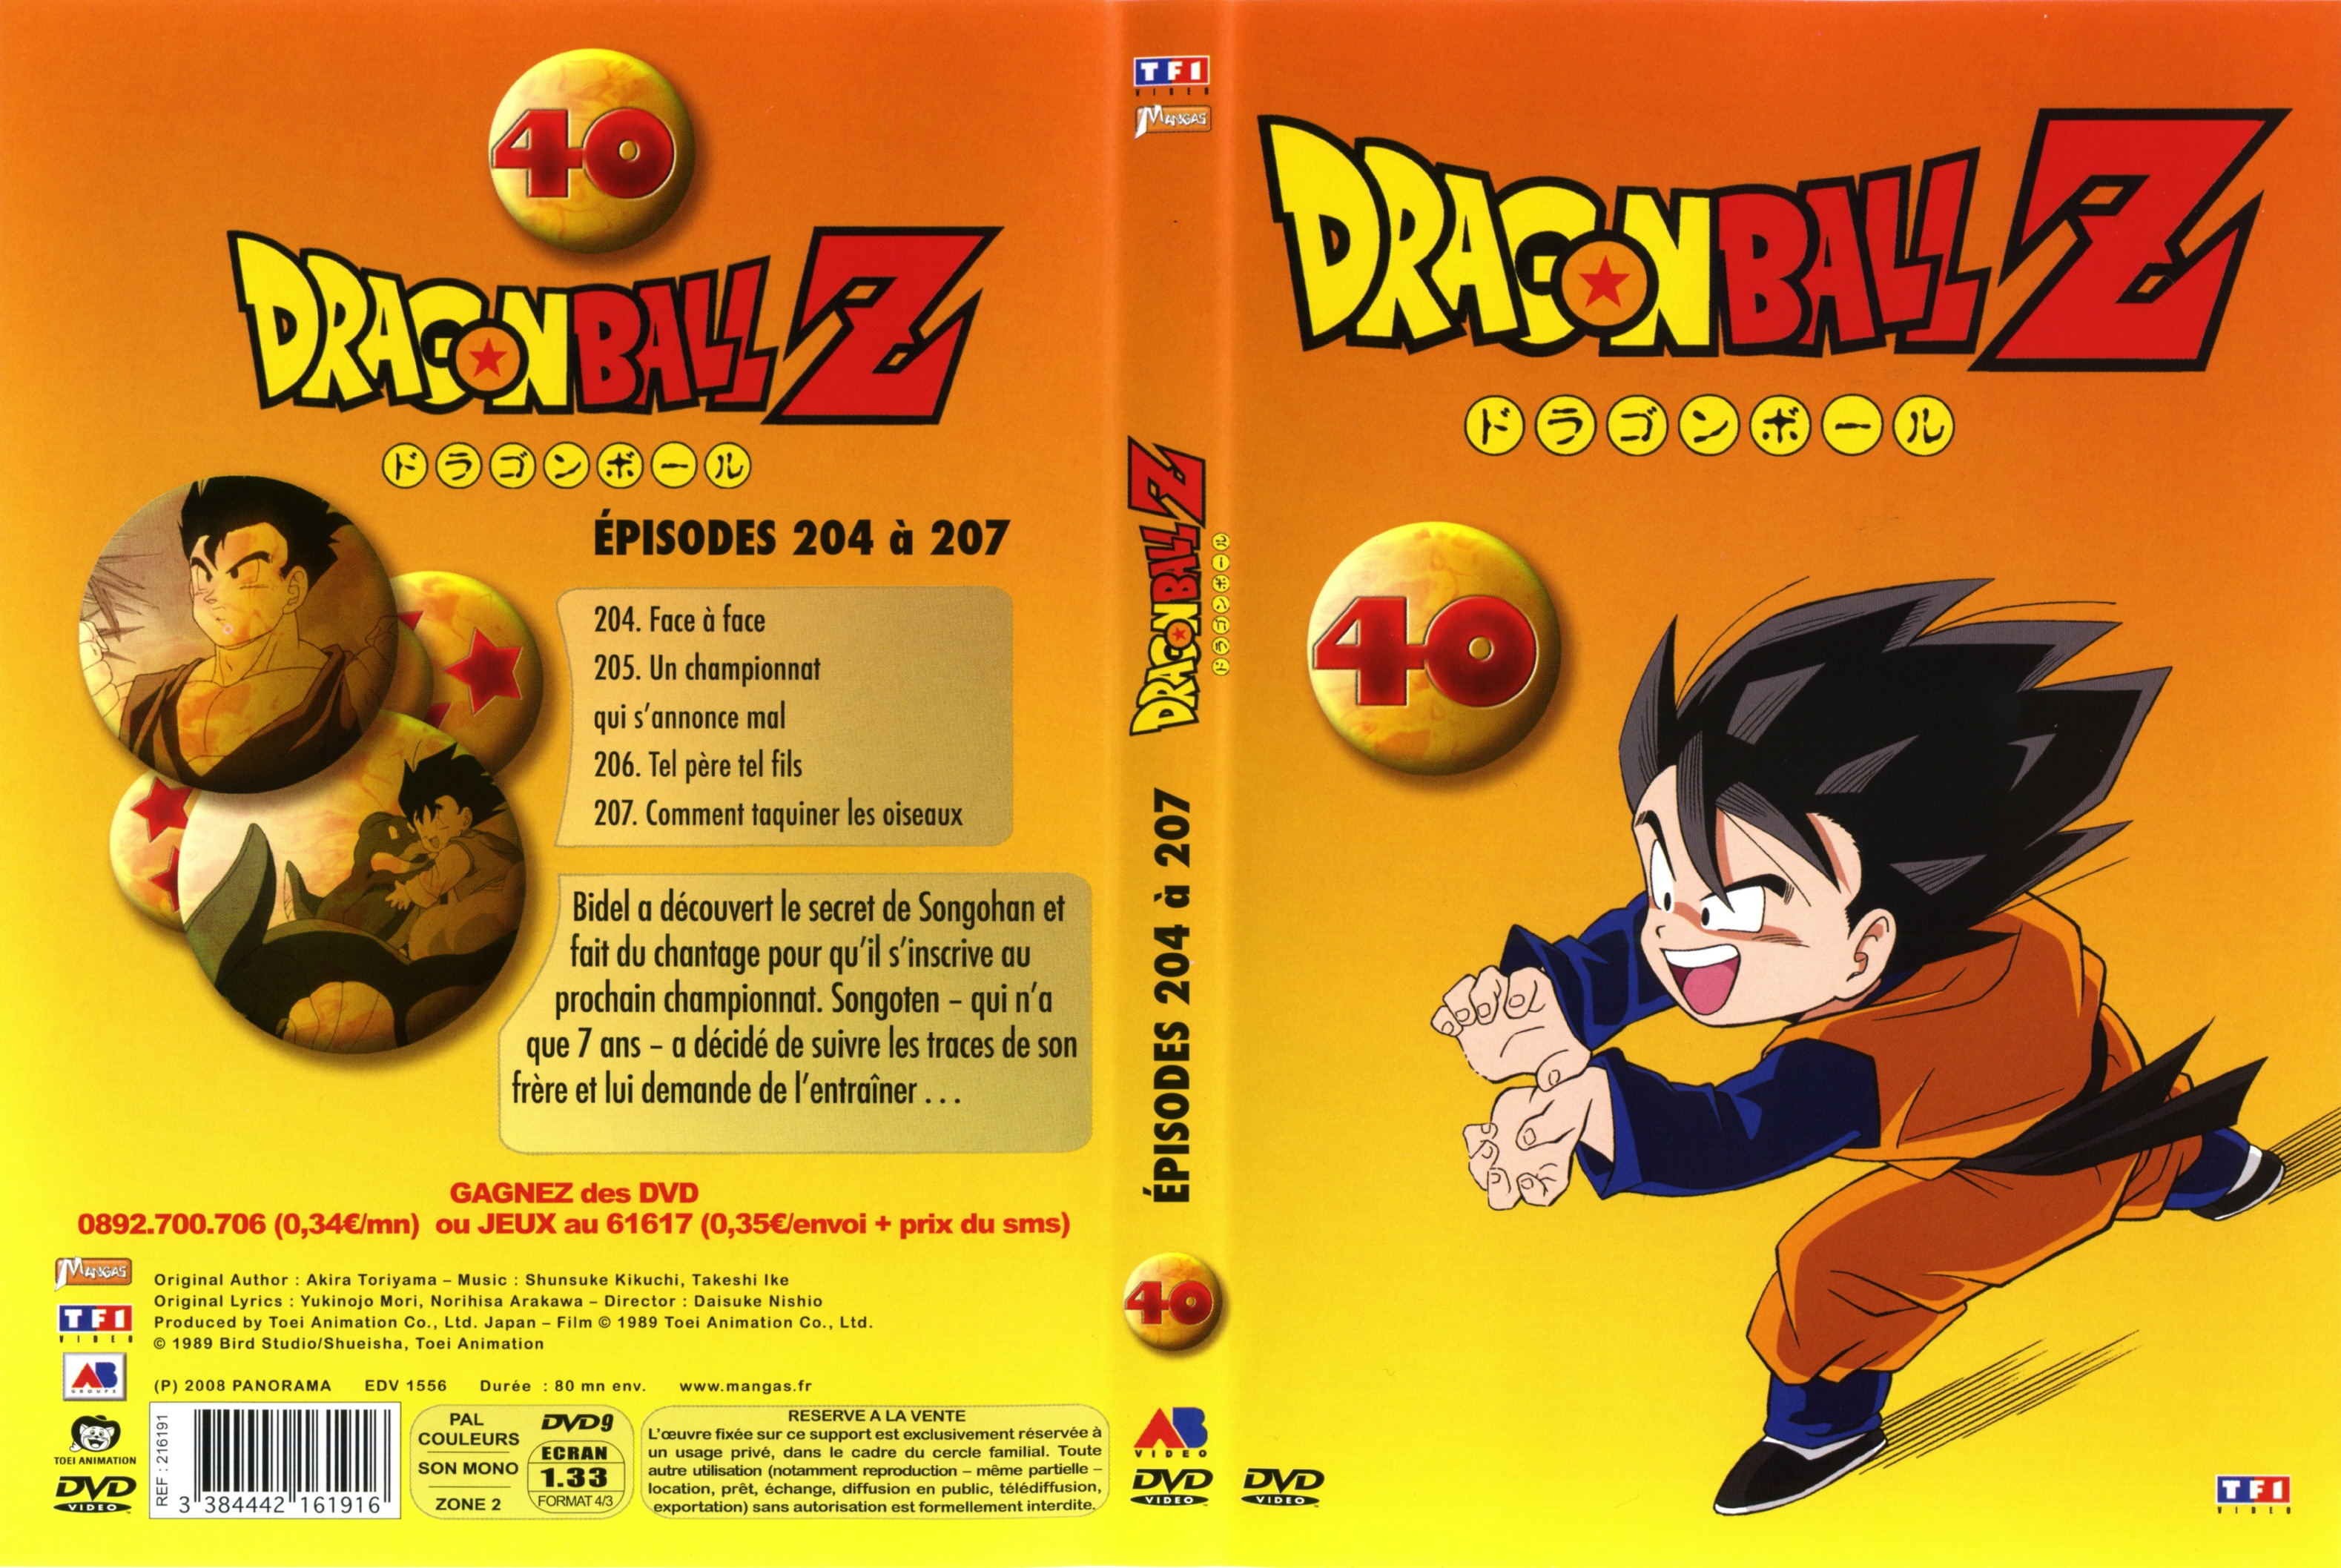 Jaquette DVD Dragon ball Z vol 40